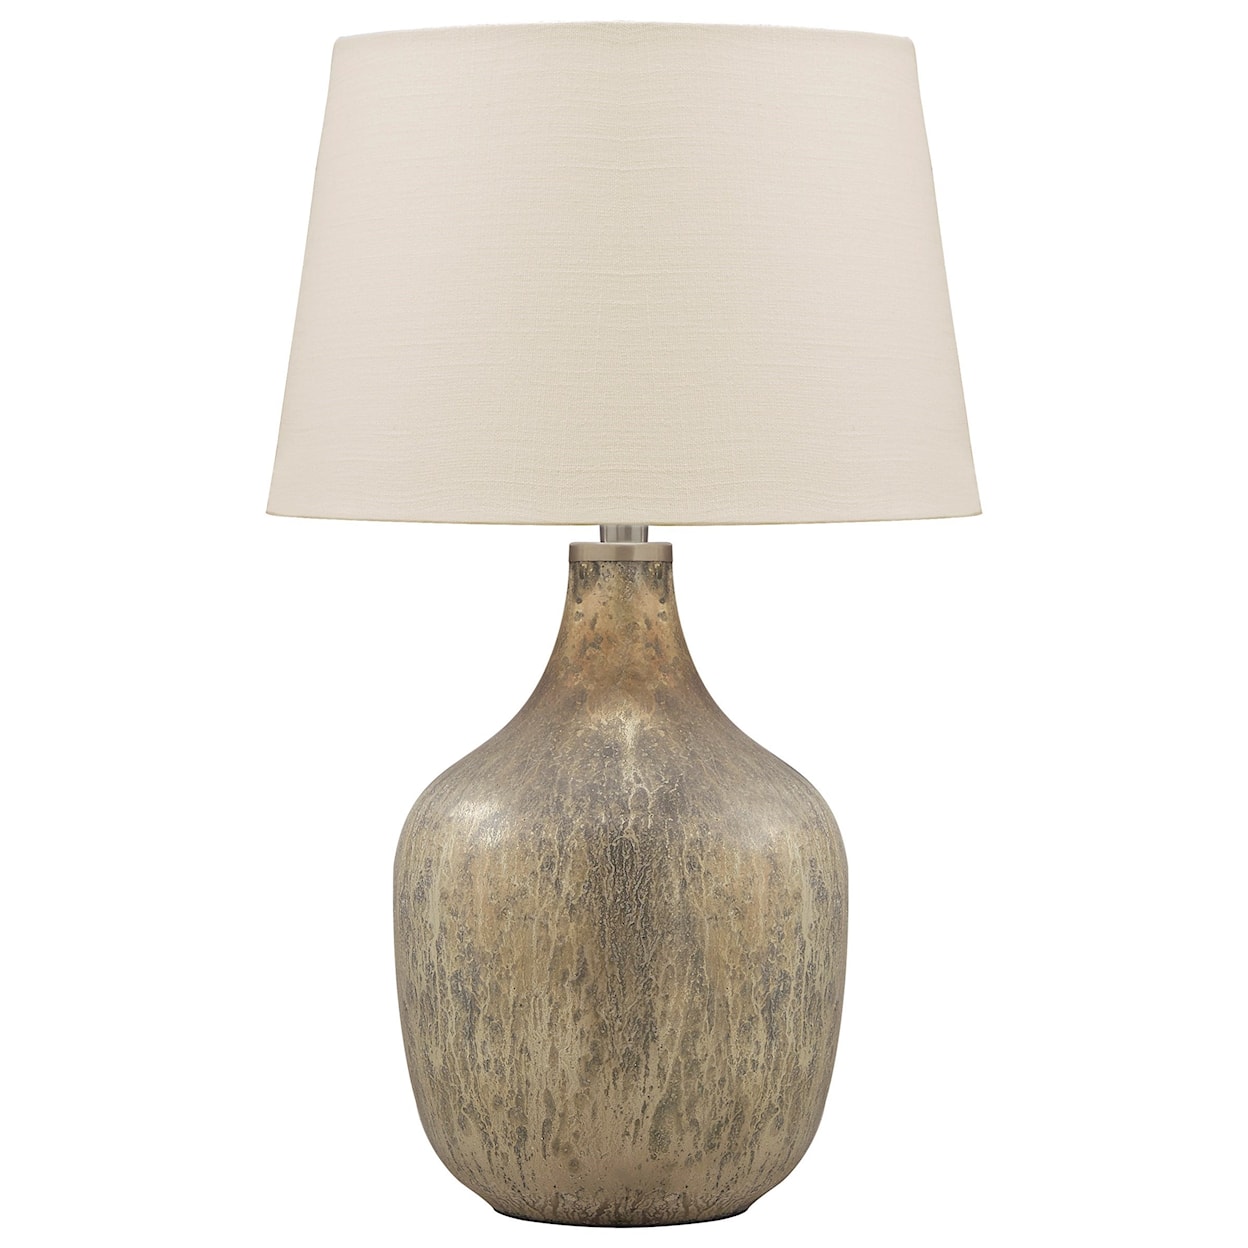 Ashley Furniture Signature Design Lamps - Casual Mari Gray/Gold Finish Table Lamp